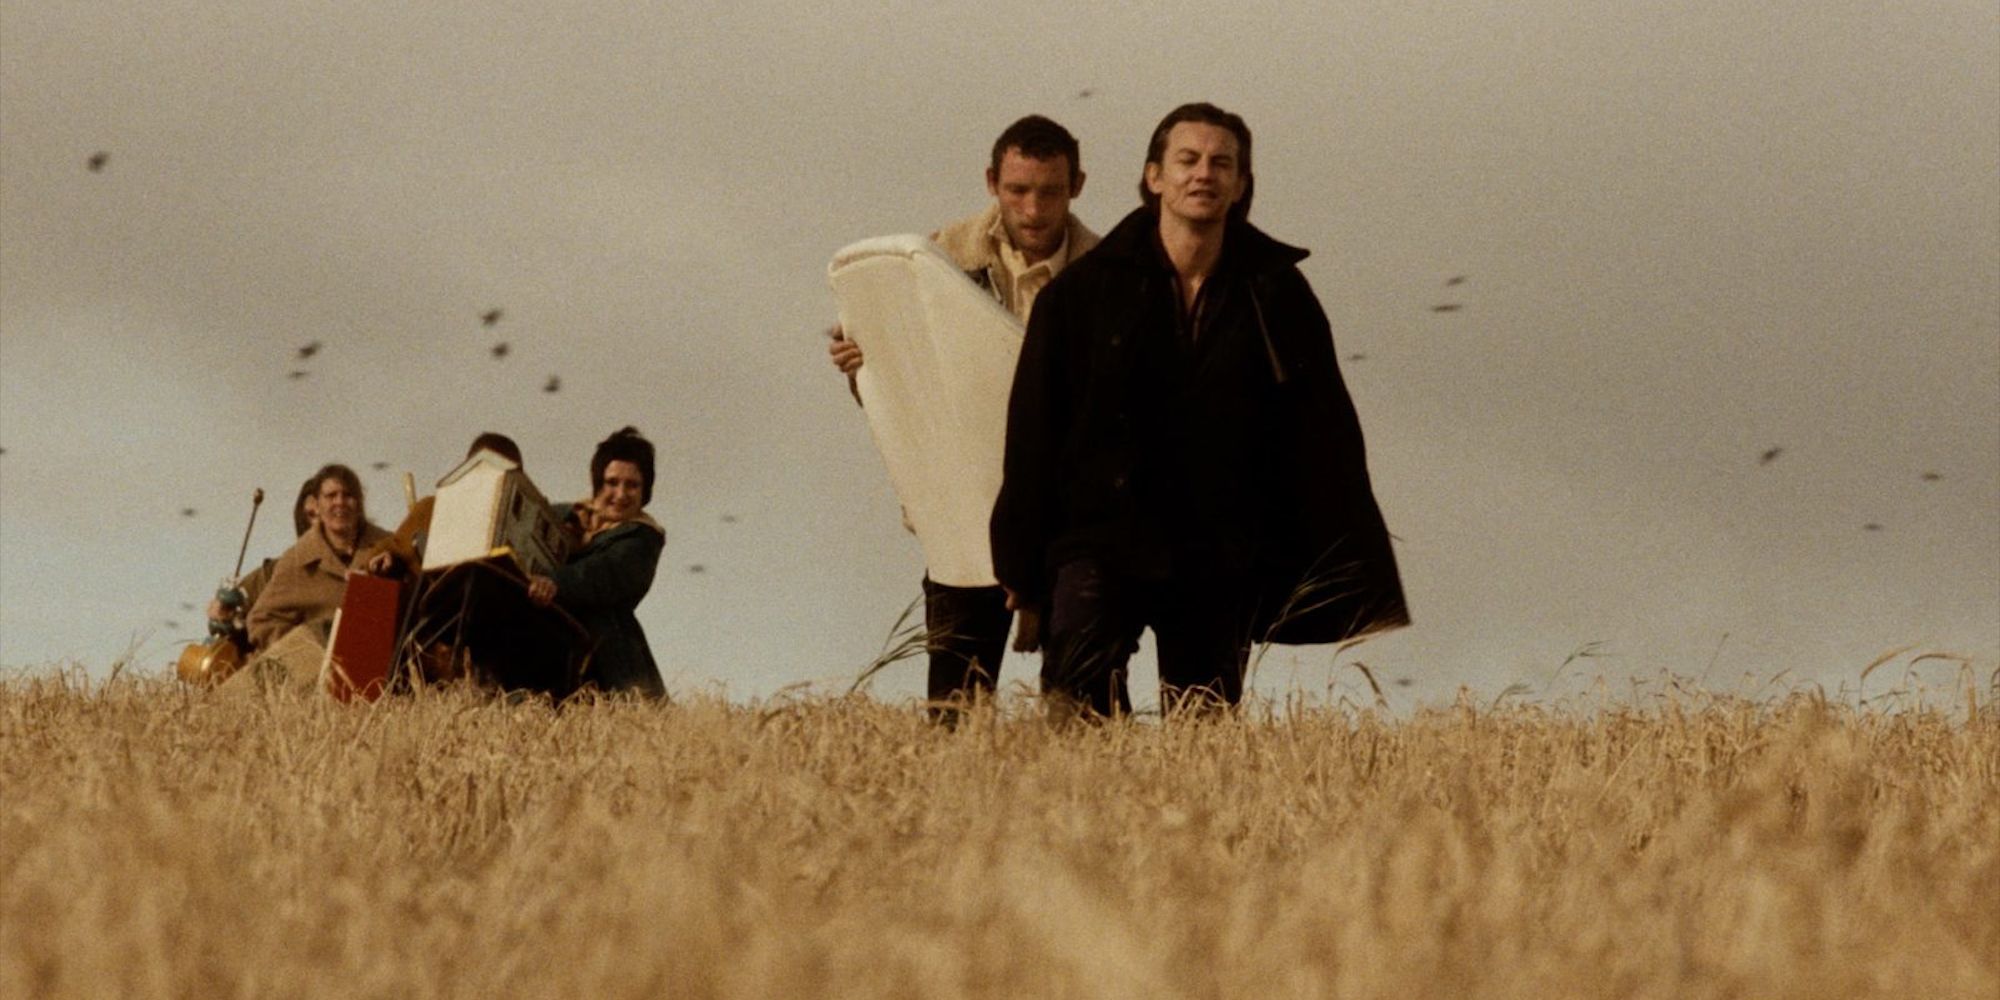 man in black coat walking in a field with men behind him.